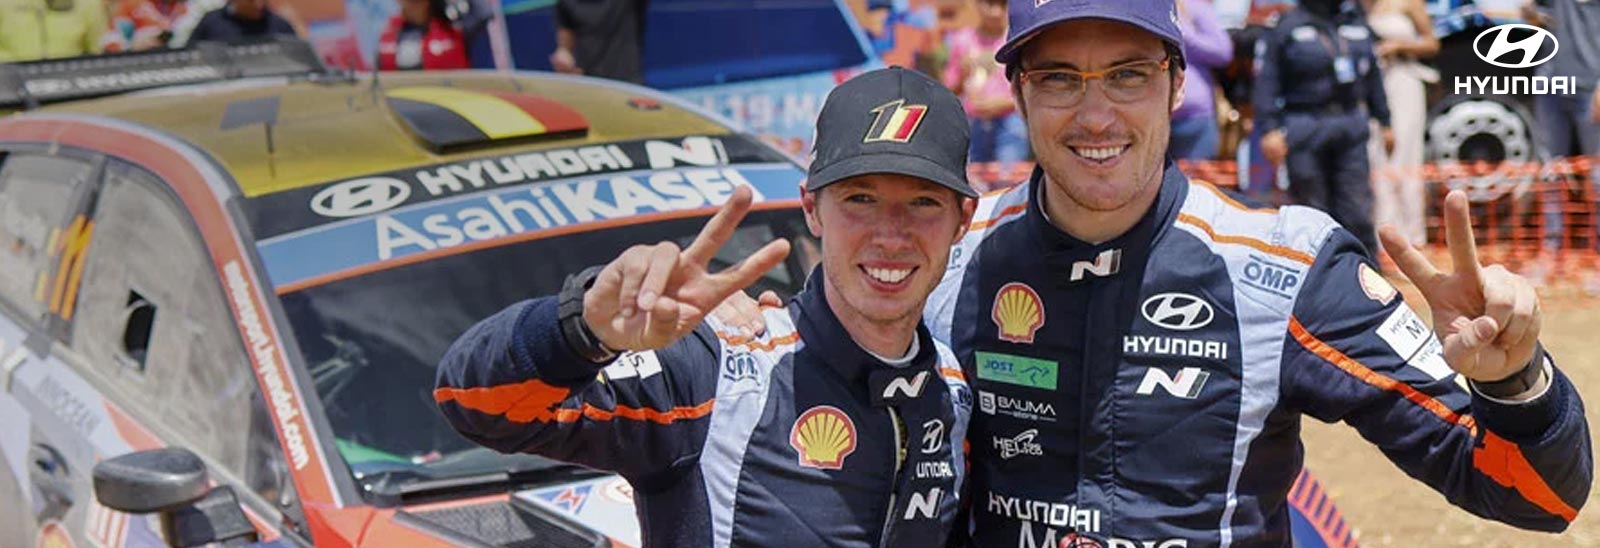 Equipo Hyundai WRC saludando tras podio en México